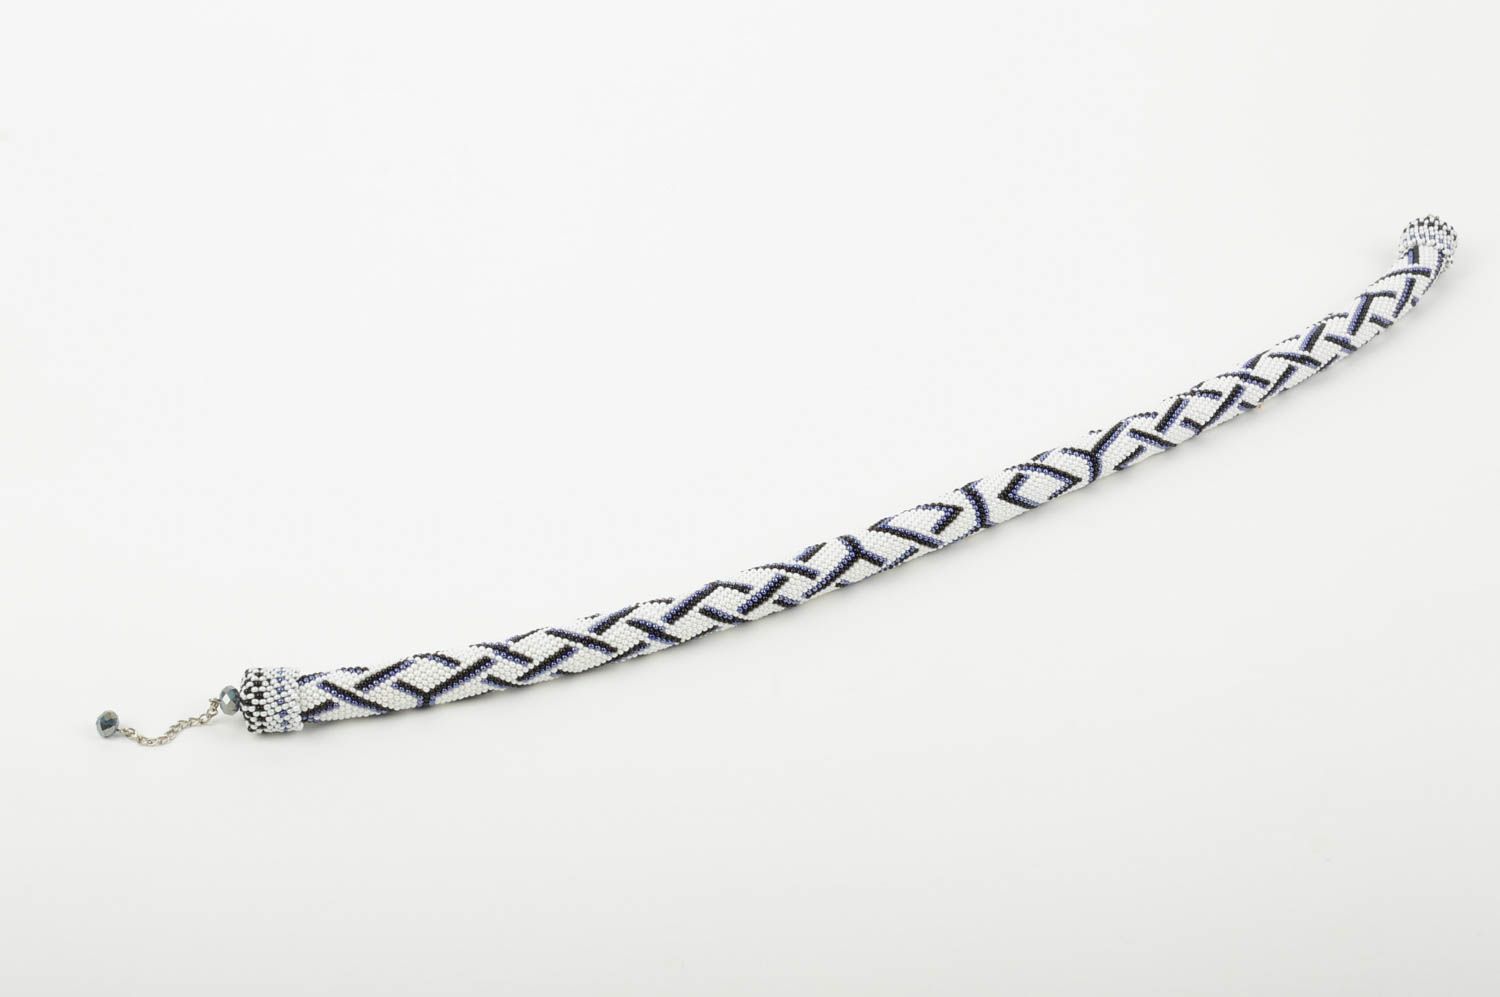 Handmade beaded cord necklace artisan jewelry beaded necklace designer jewelry photo 4